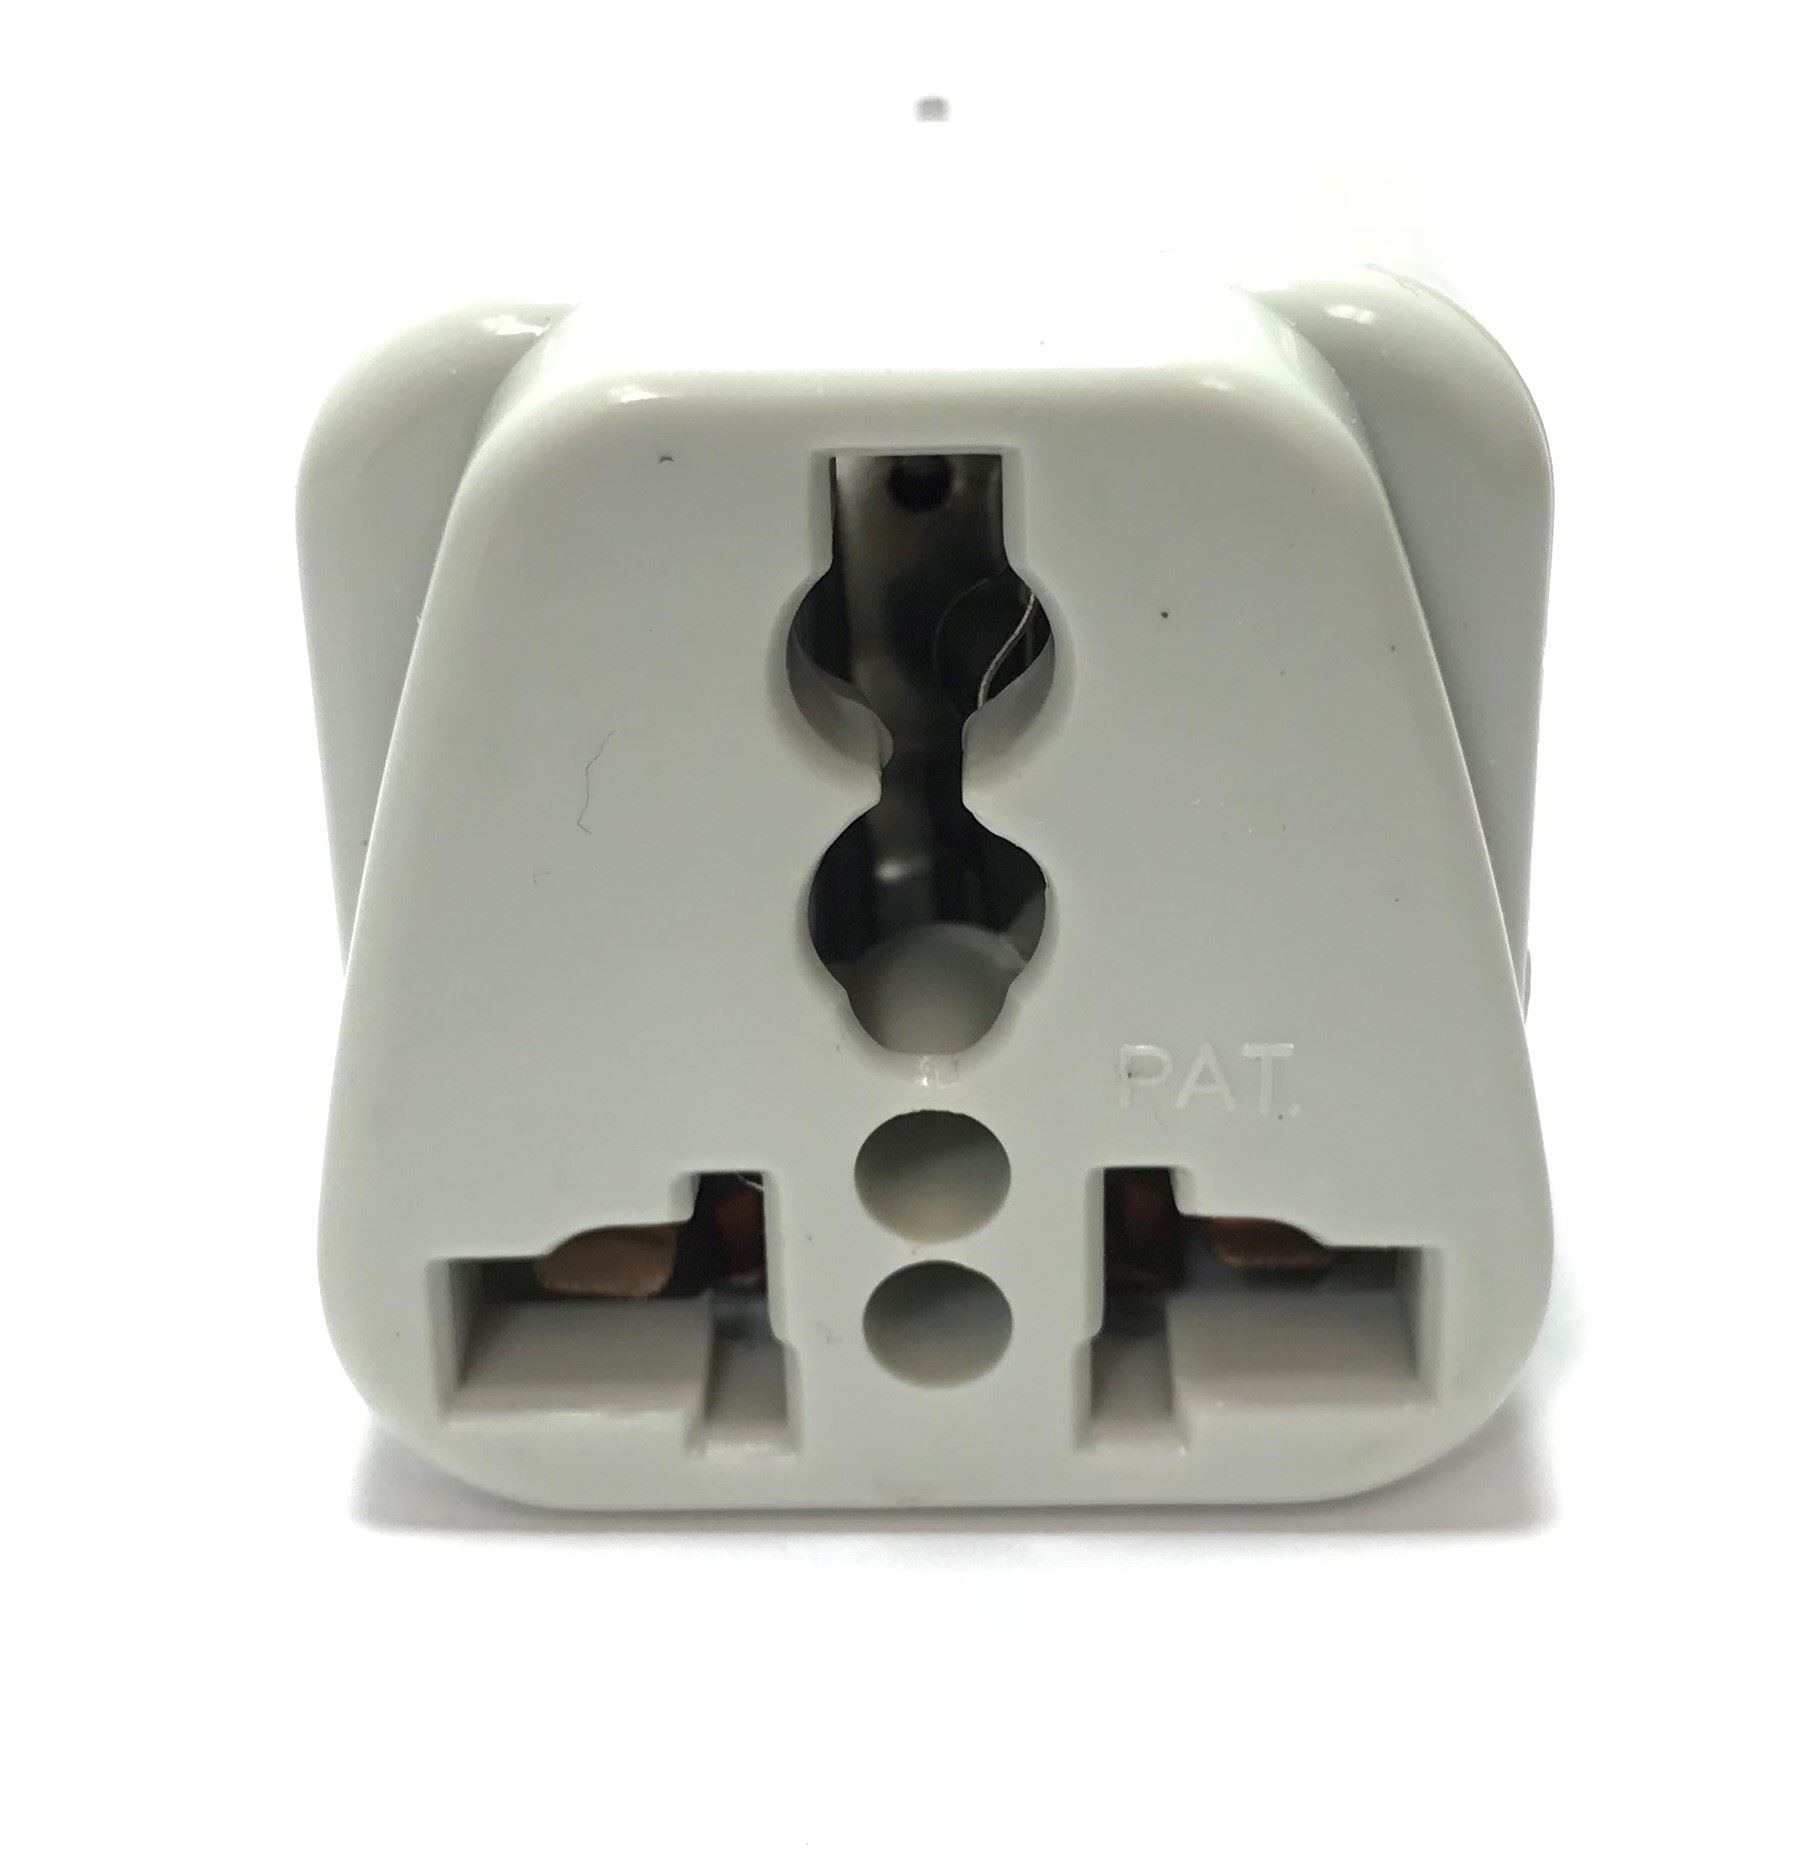 SS416 Universal Input to 3 pin Australia/New Zealand Plug Adapter 5 Pack 